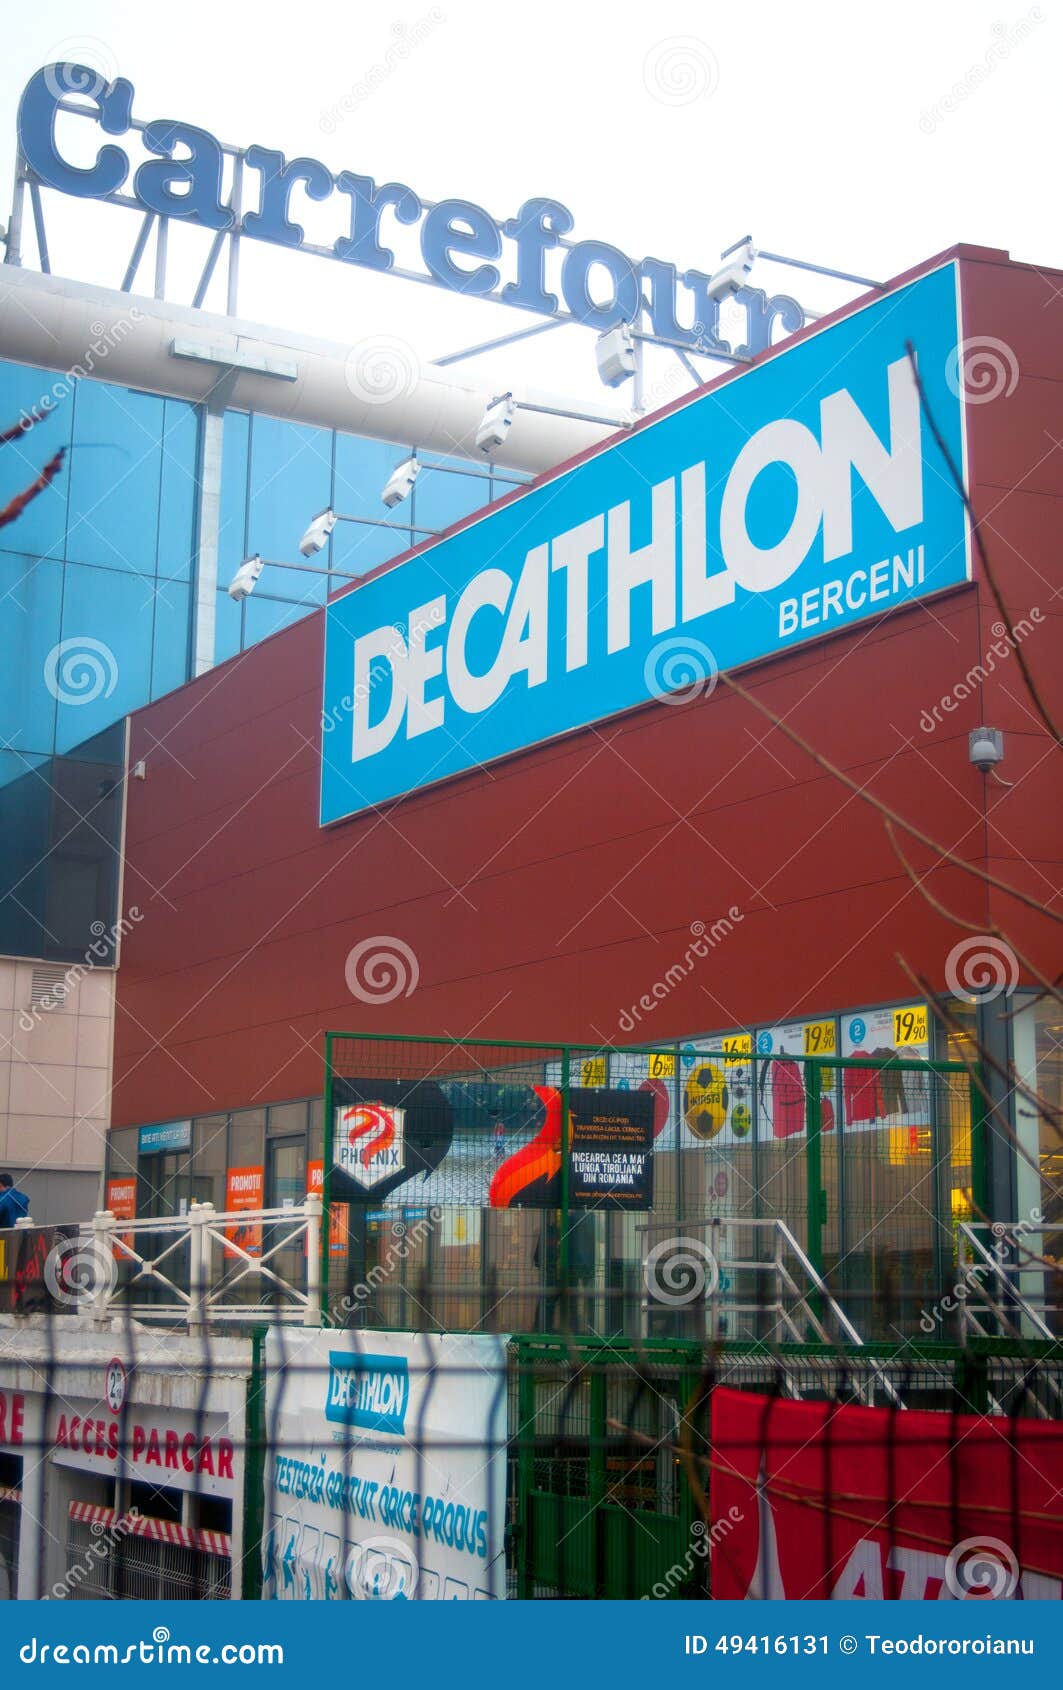 grand arena decathlon